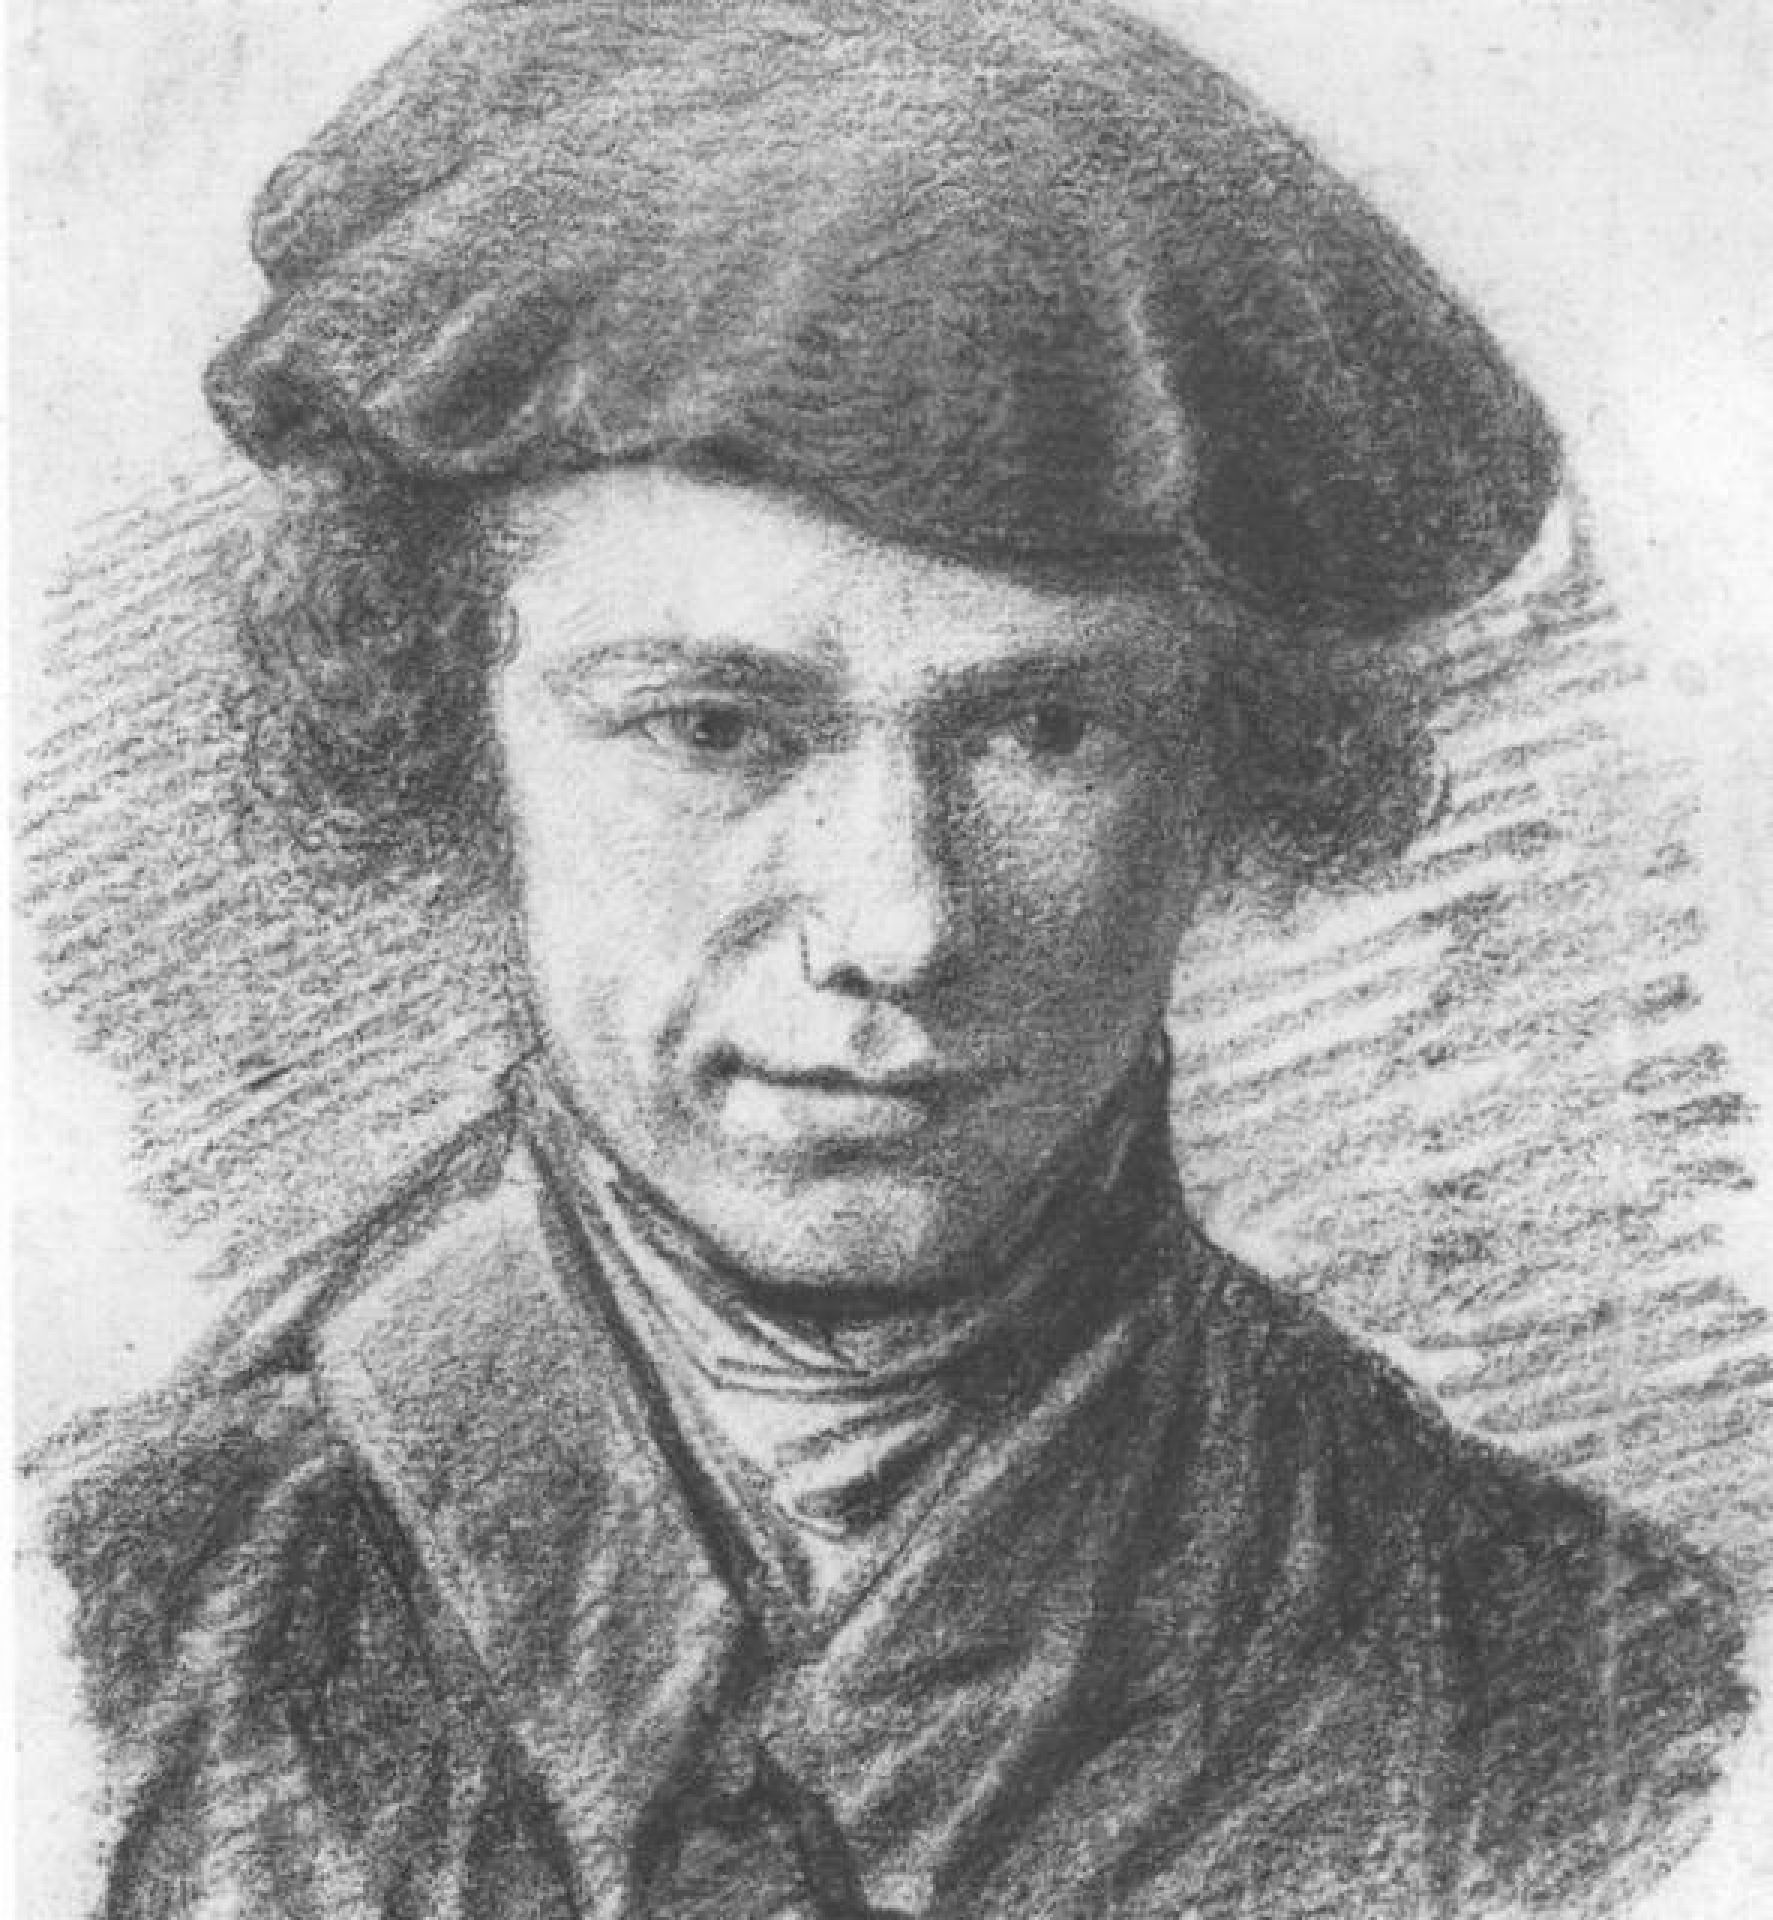 Portrait of artist, painter, watercolourist and draughtsman Barend Cornelis Koekkoek